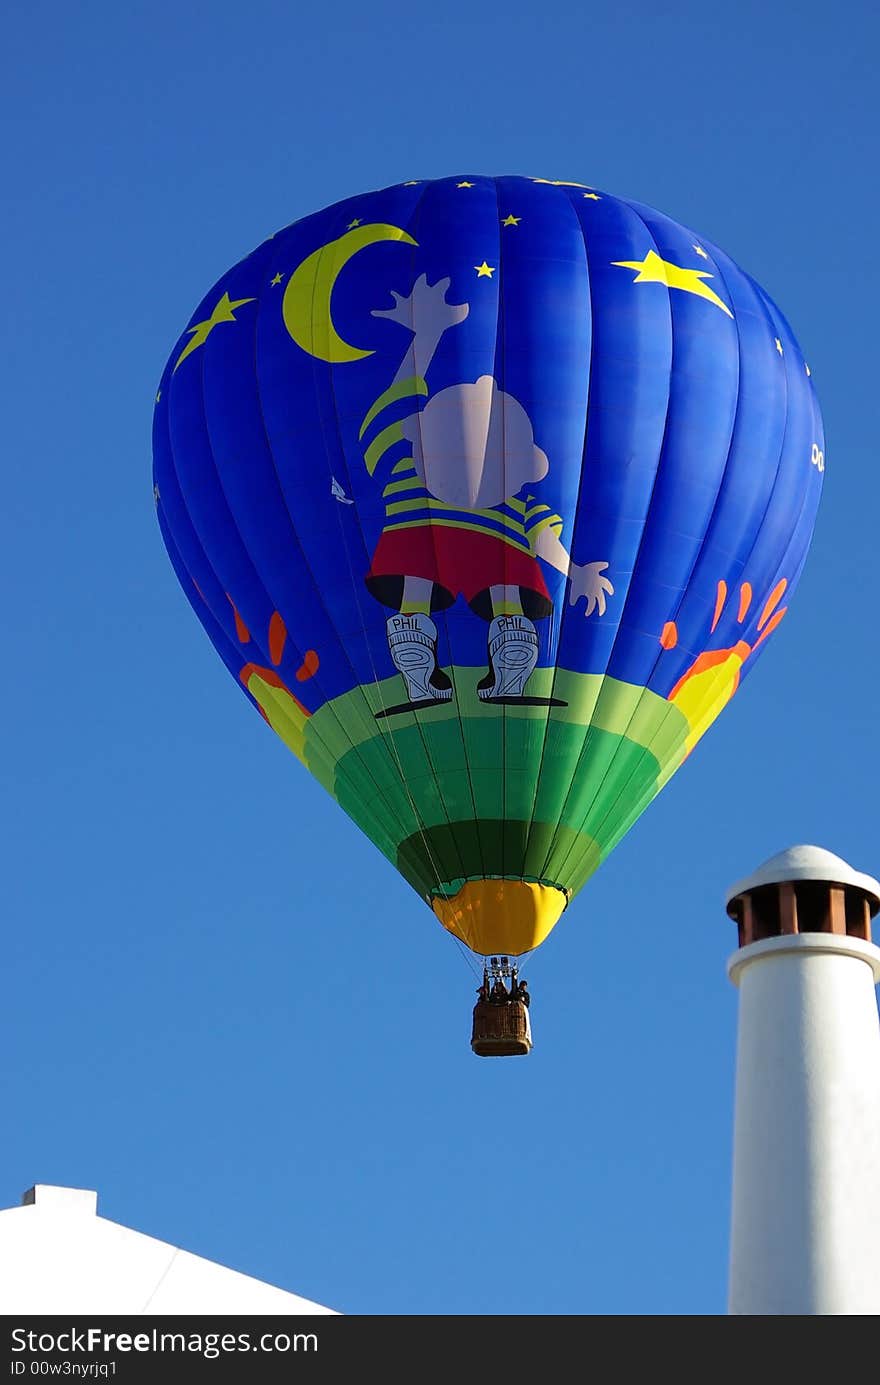 Hot air balloon in the blue sky. Hot air balloon in the blue sky.